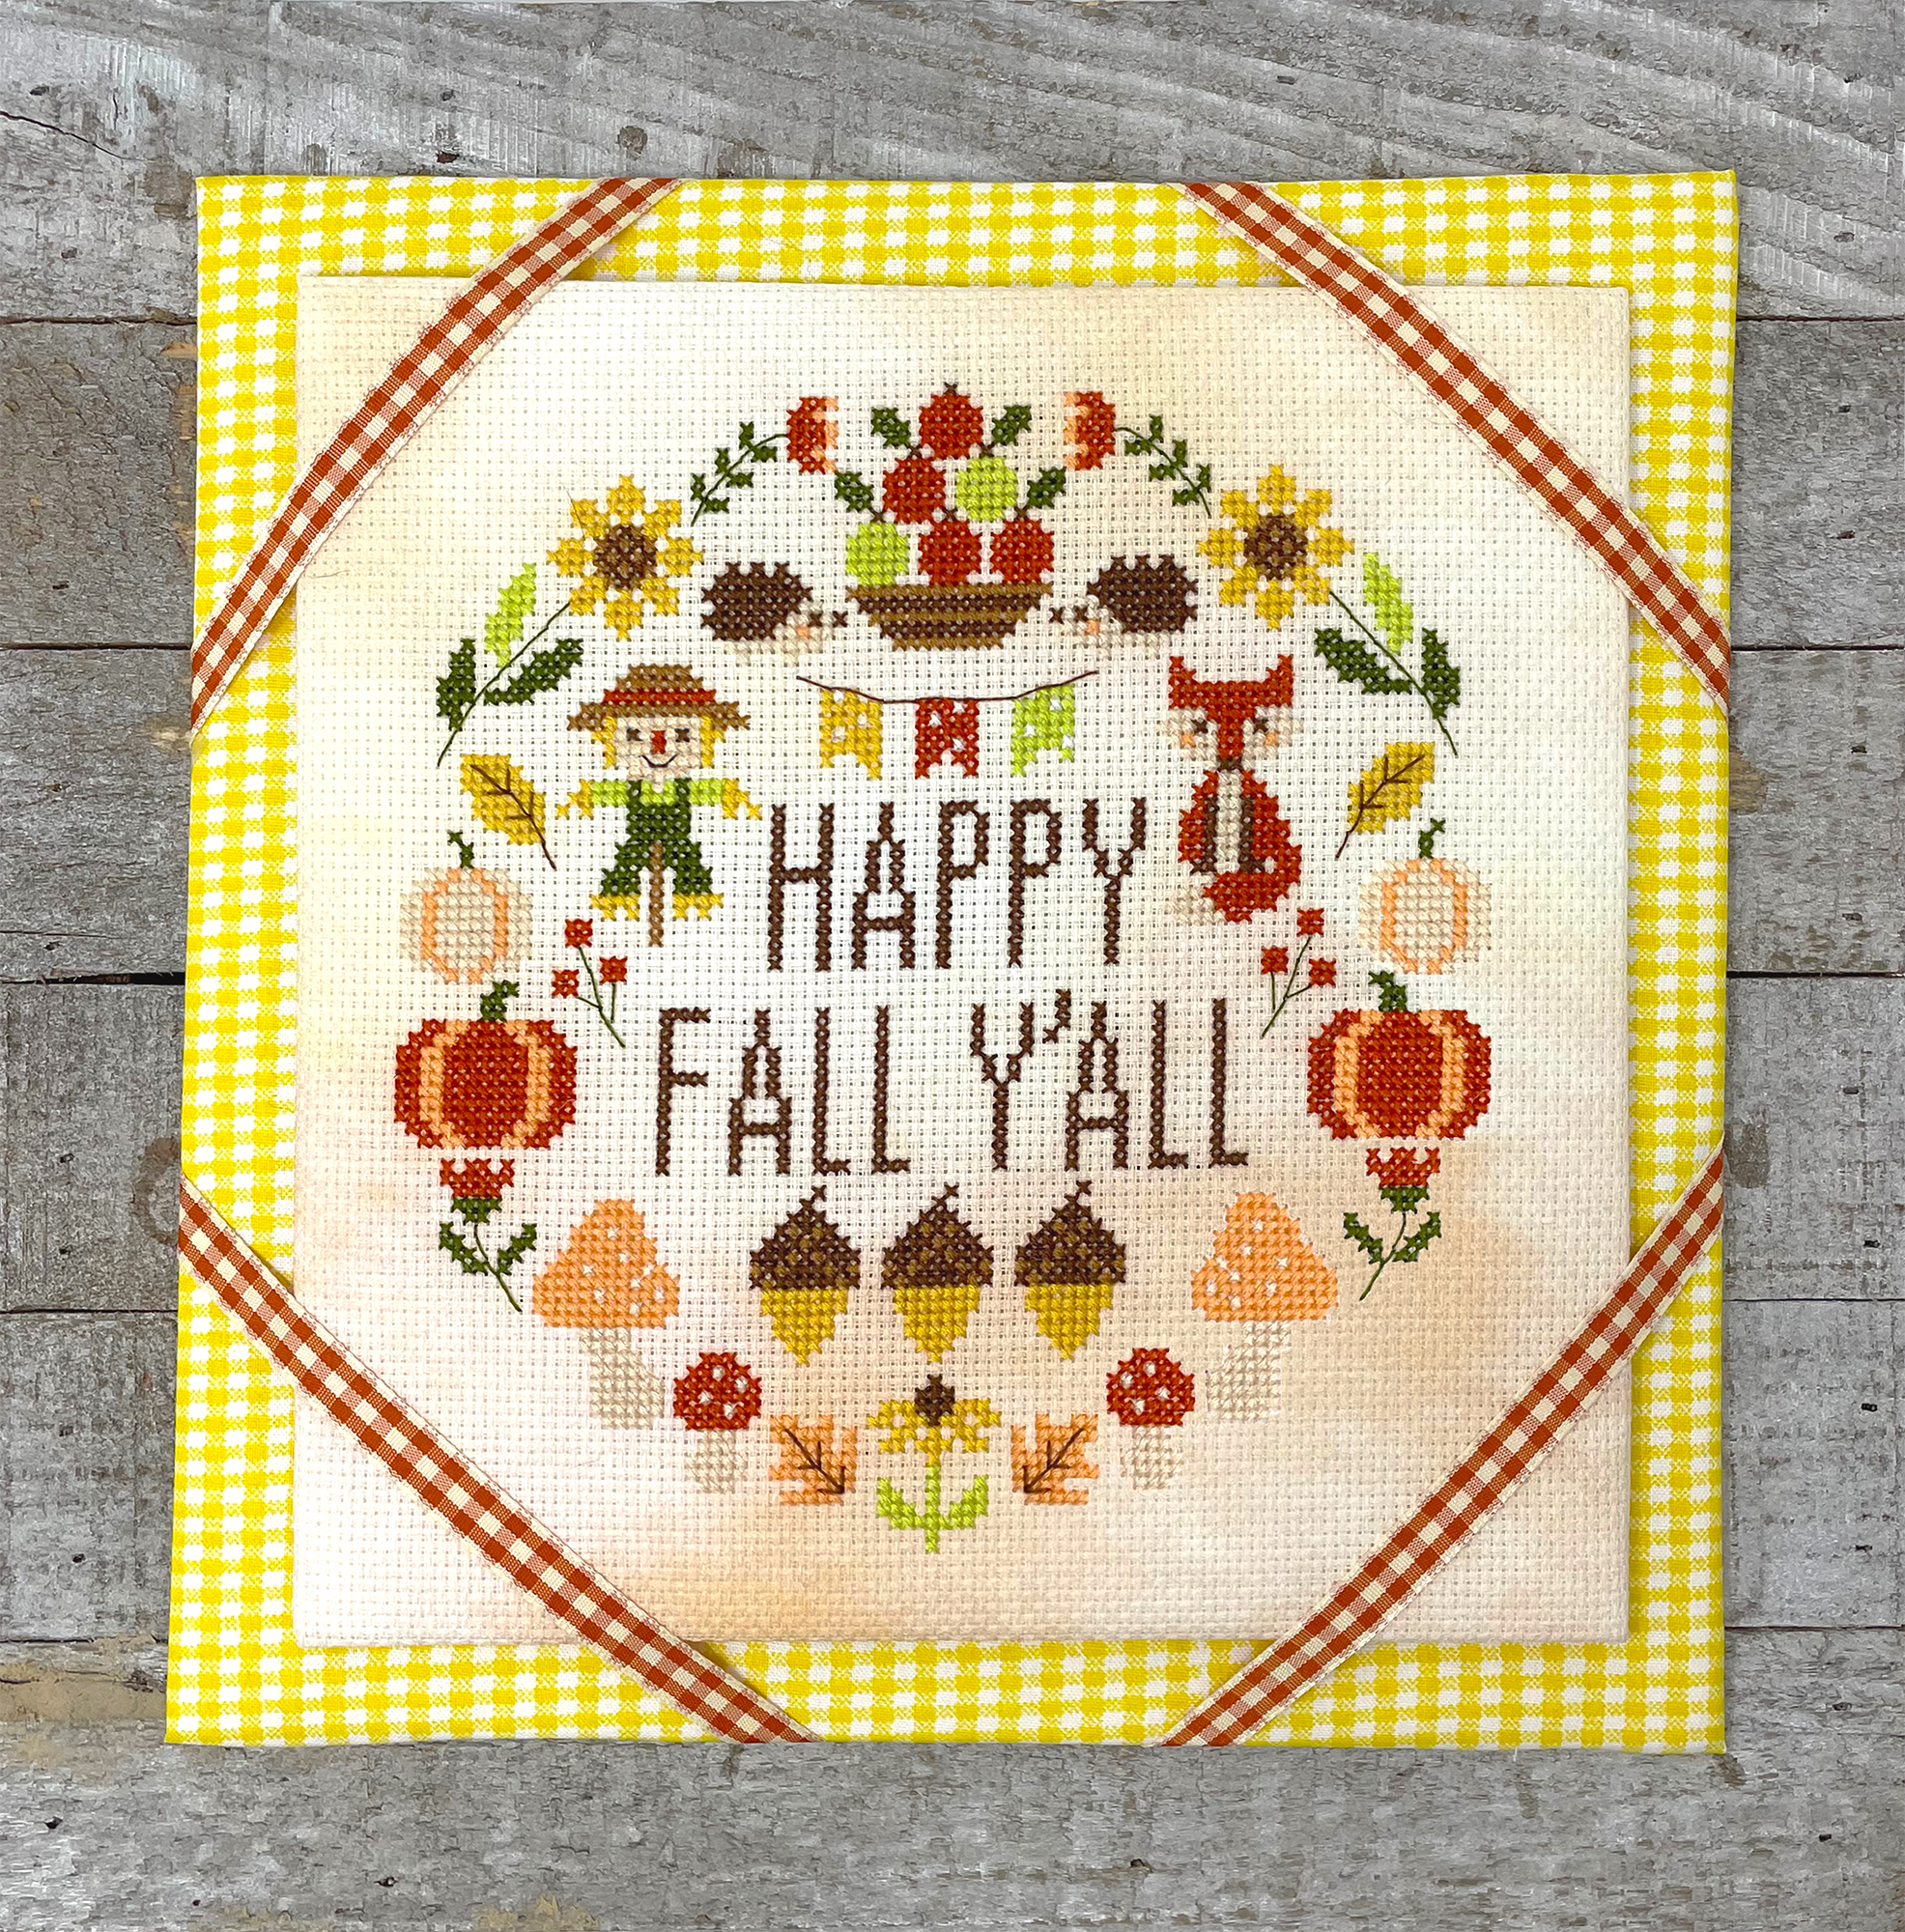 30 charming autumn cross stitch patterns to stitch today - Gathered